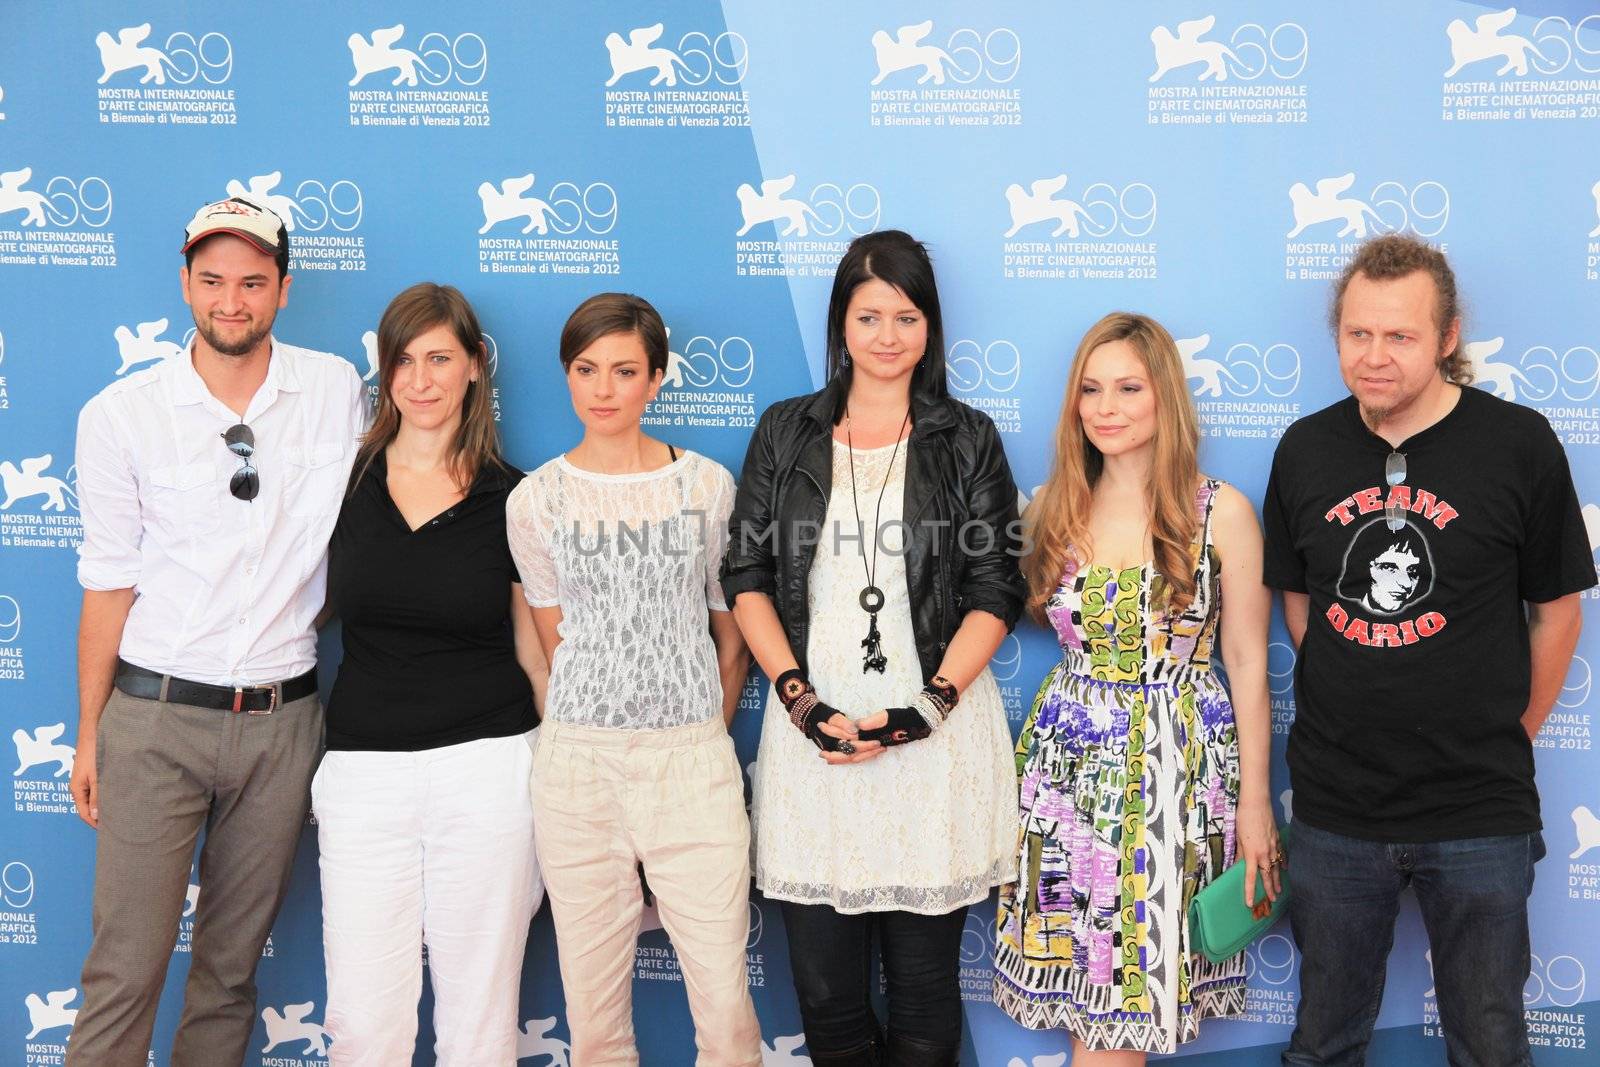 Alex Schimdt movie's cast poses for photographers at 69th Venice Film Festival